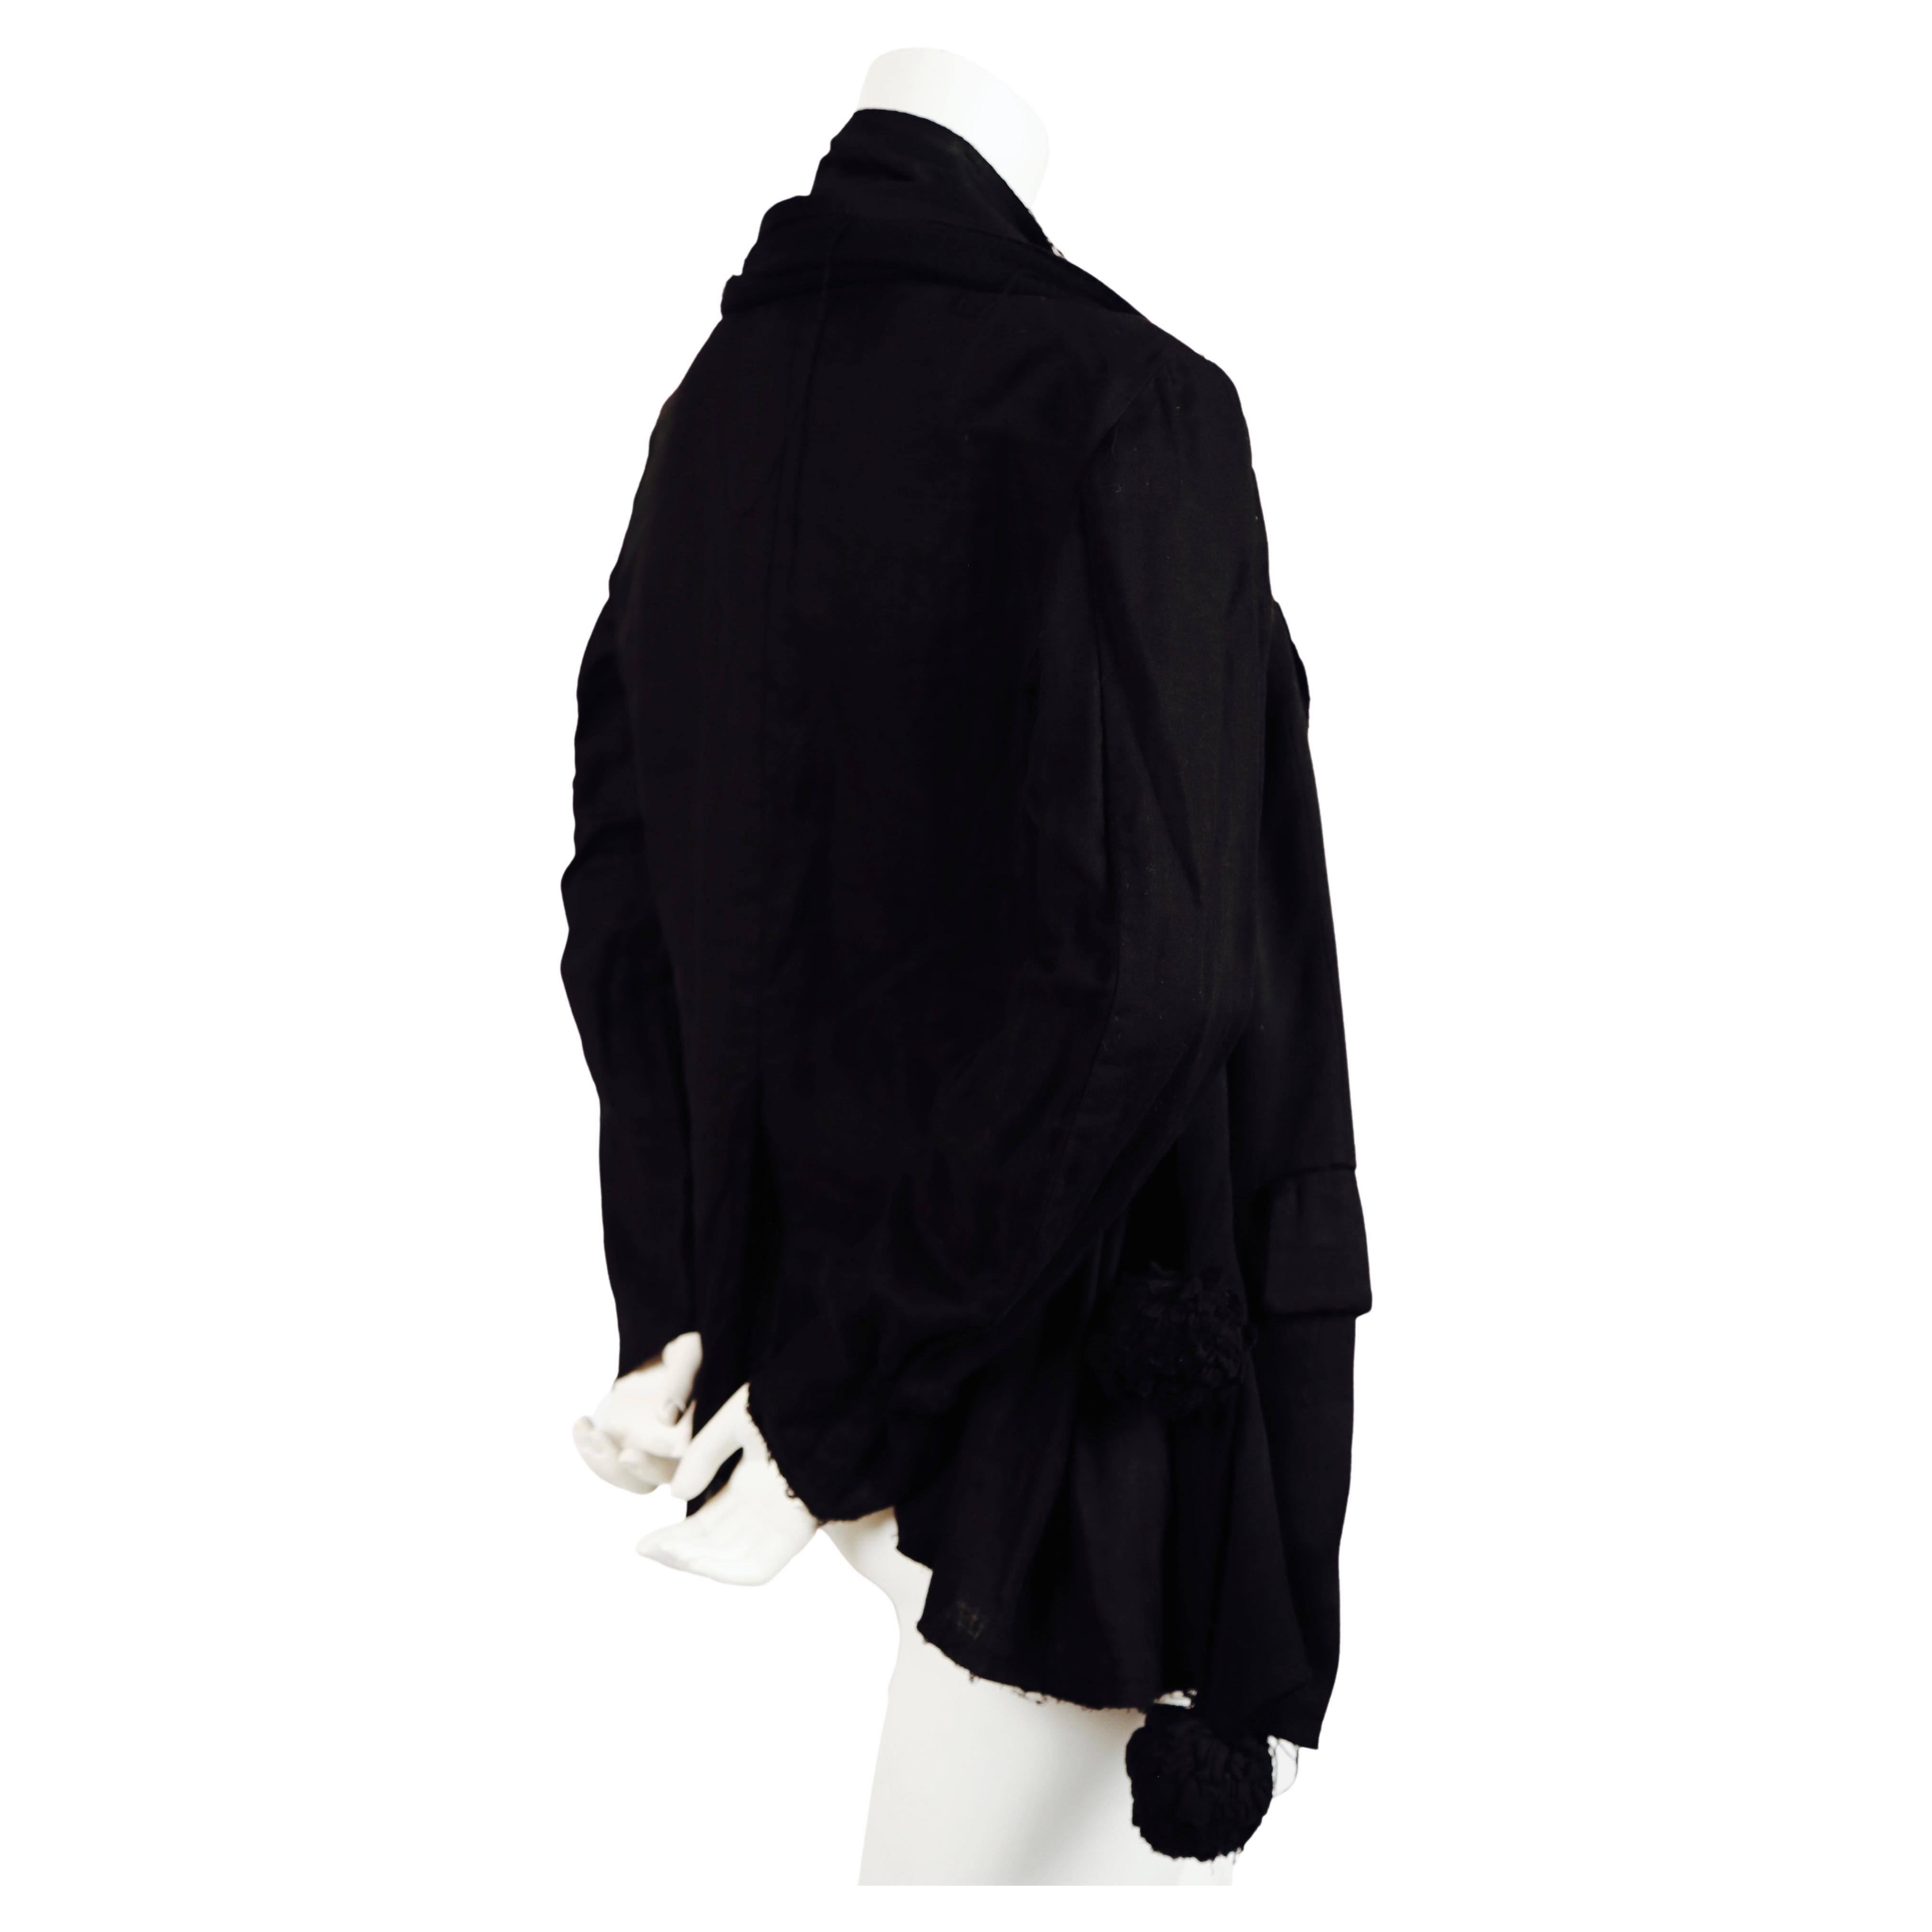 Black 2003 COMME DES GARCONS black jacket with scarf overlay and pom pom details